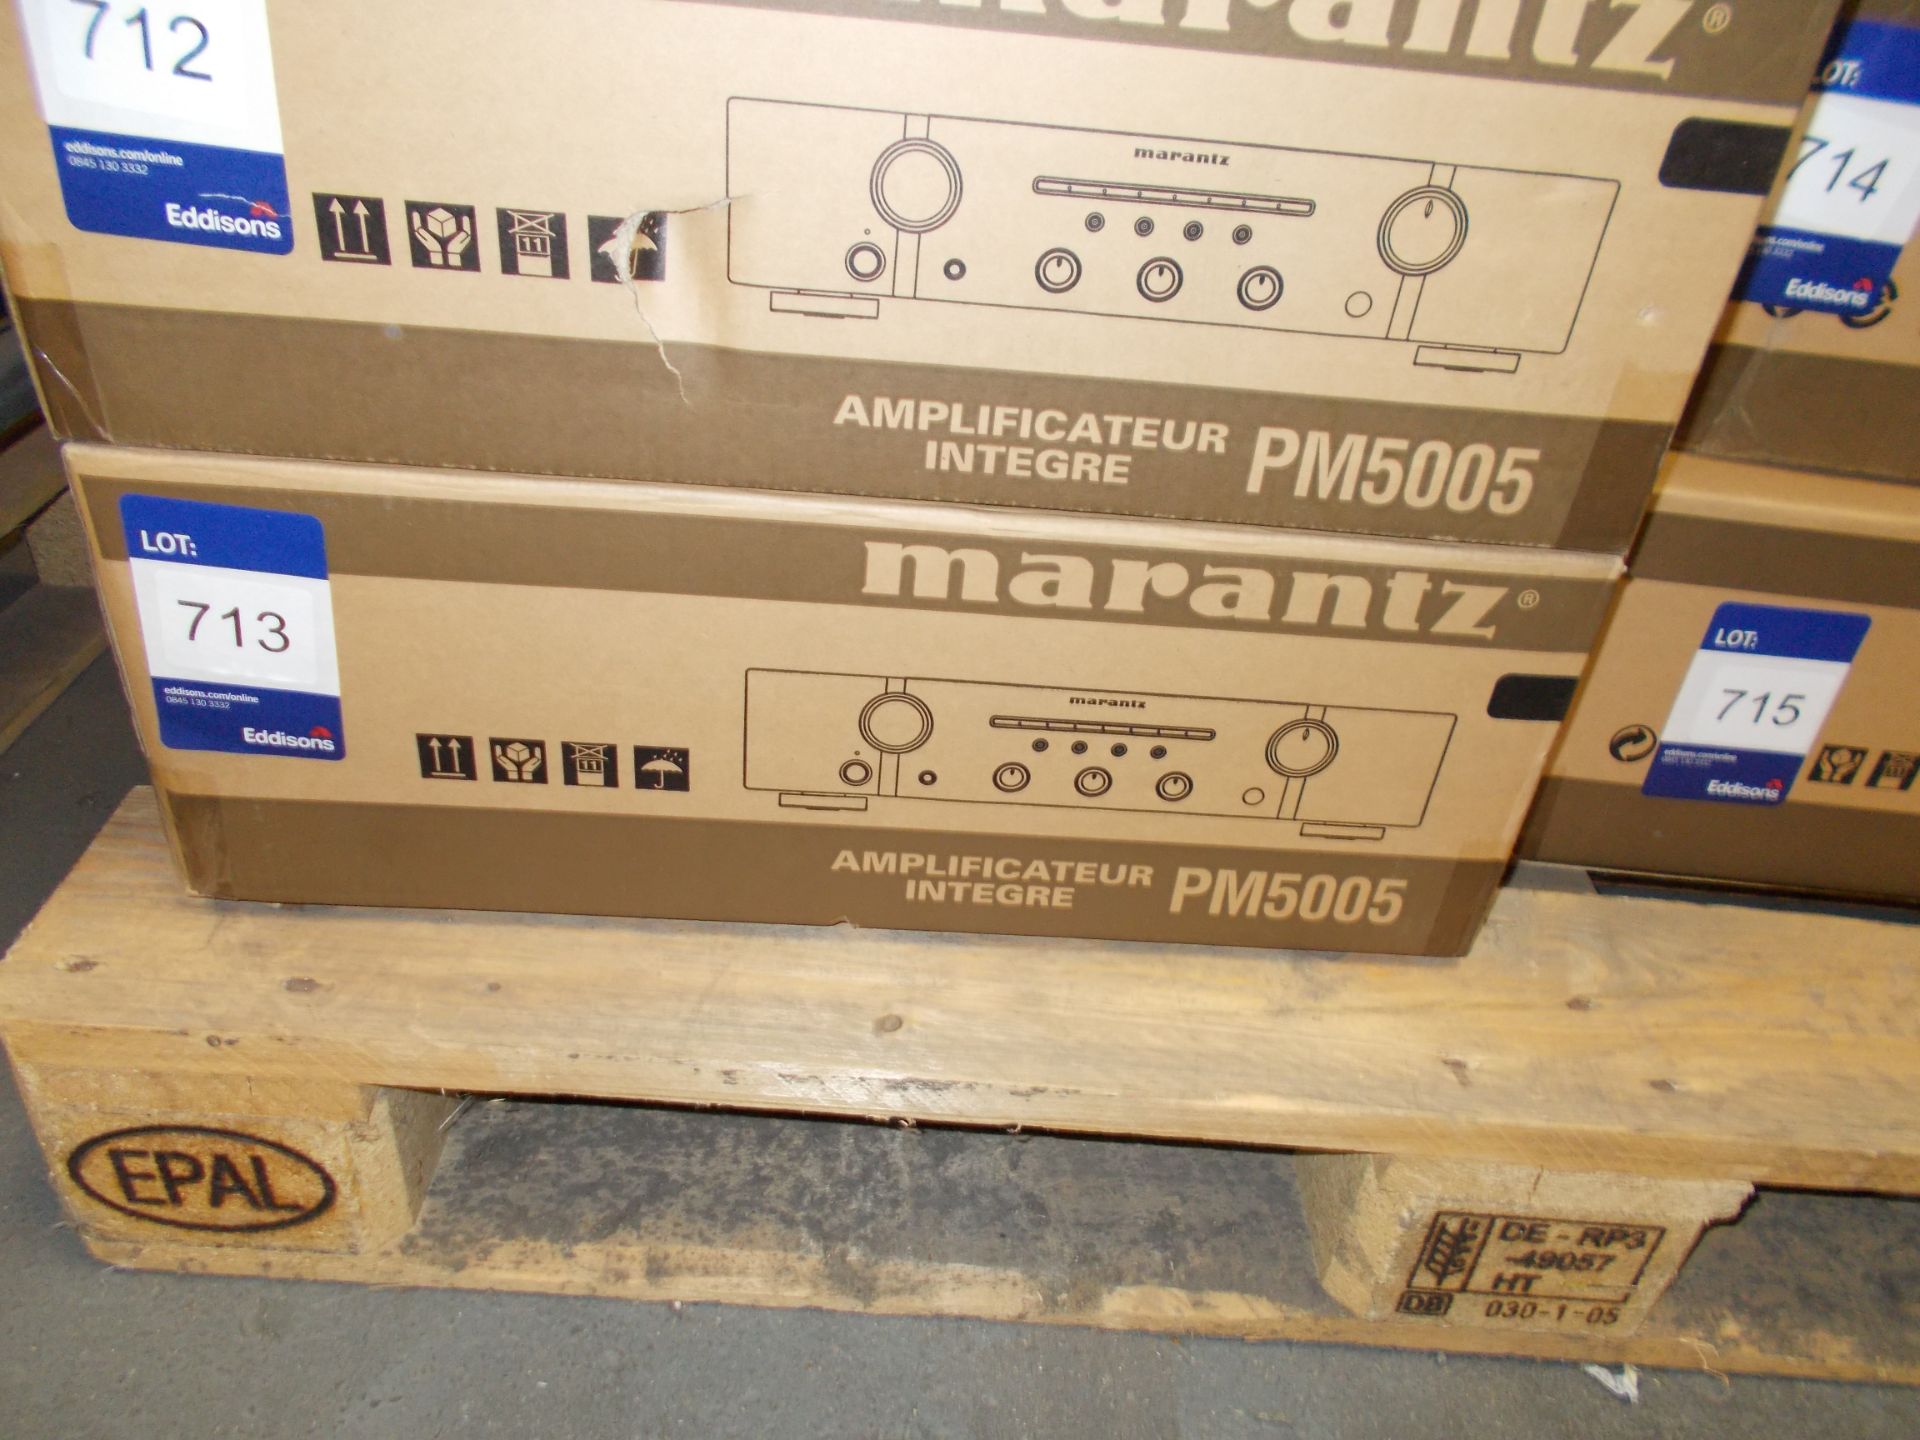 Marantz PM5005 Amplifier, Black (boxed) – RRP £199